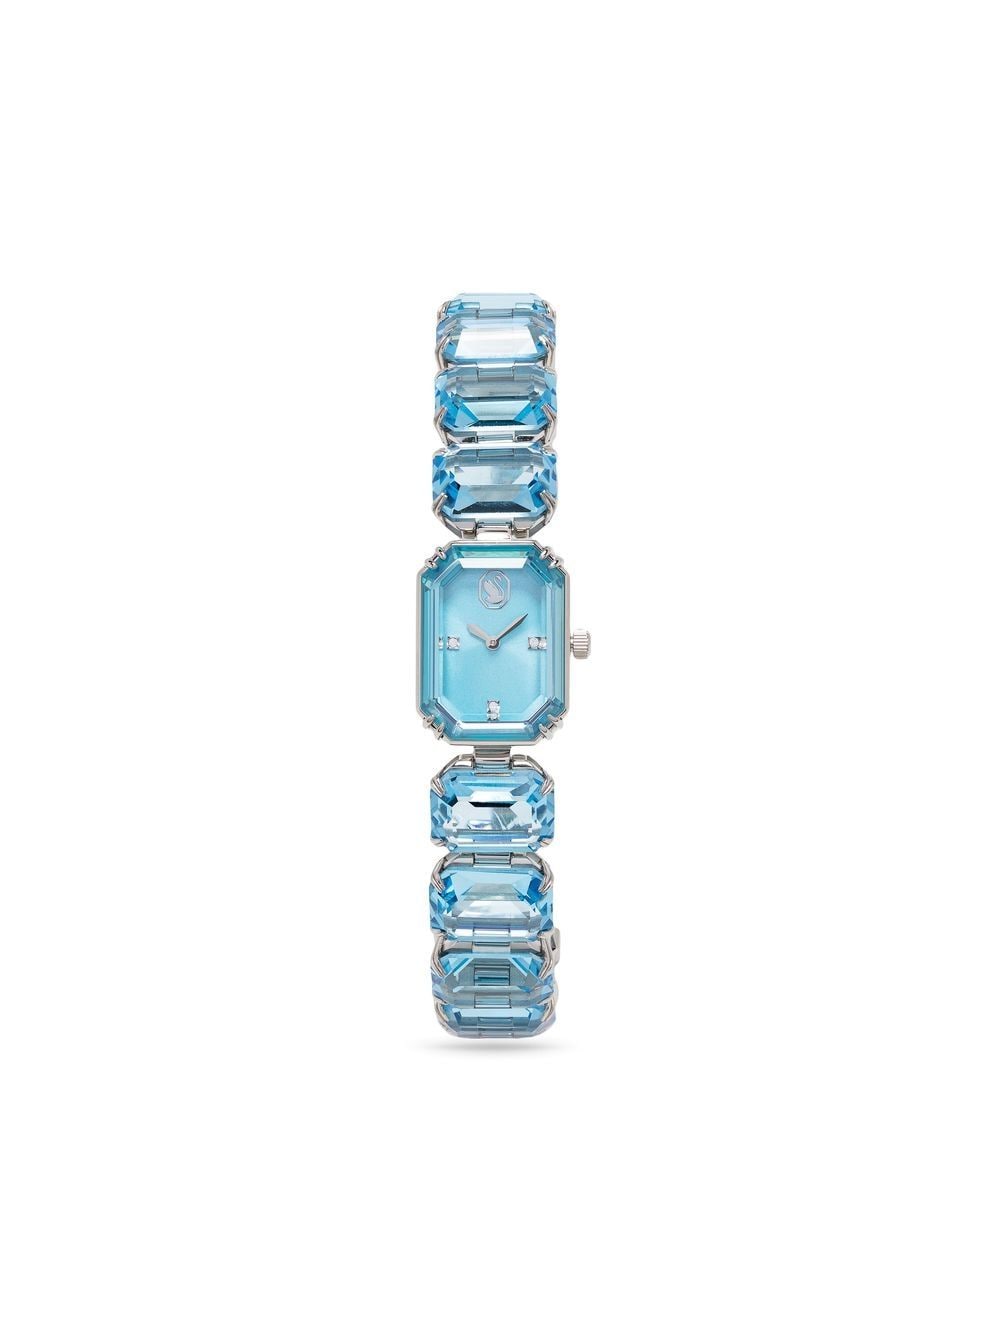 Octagon cut quartz watch